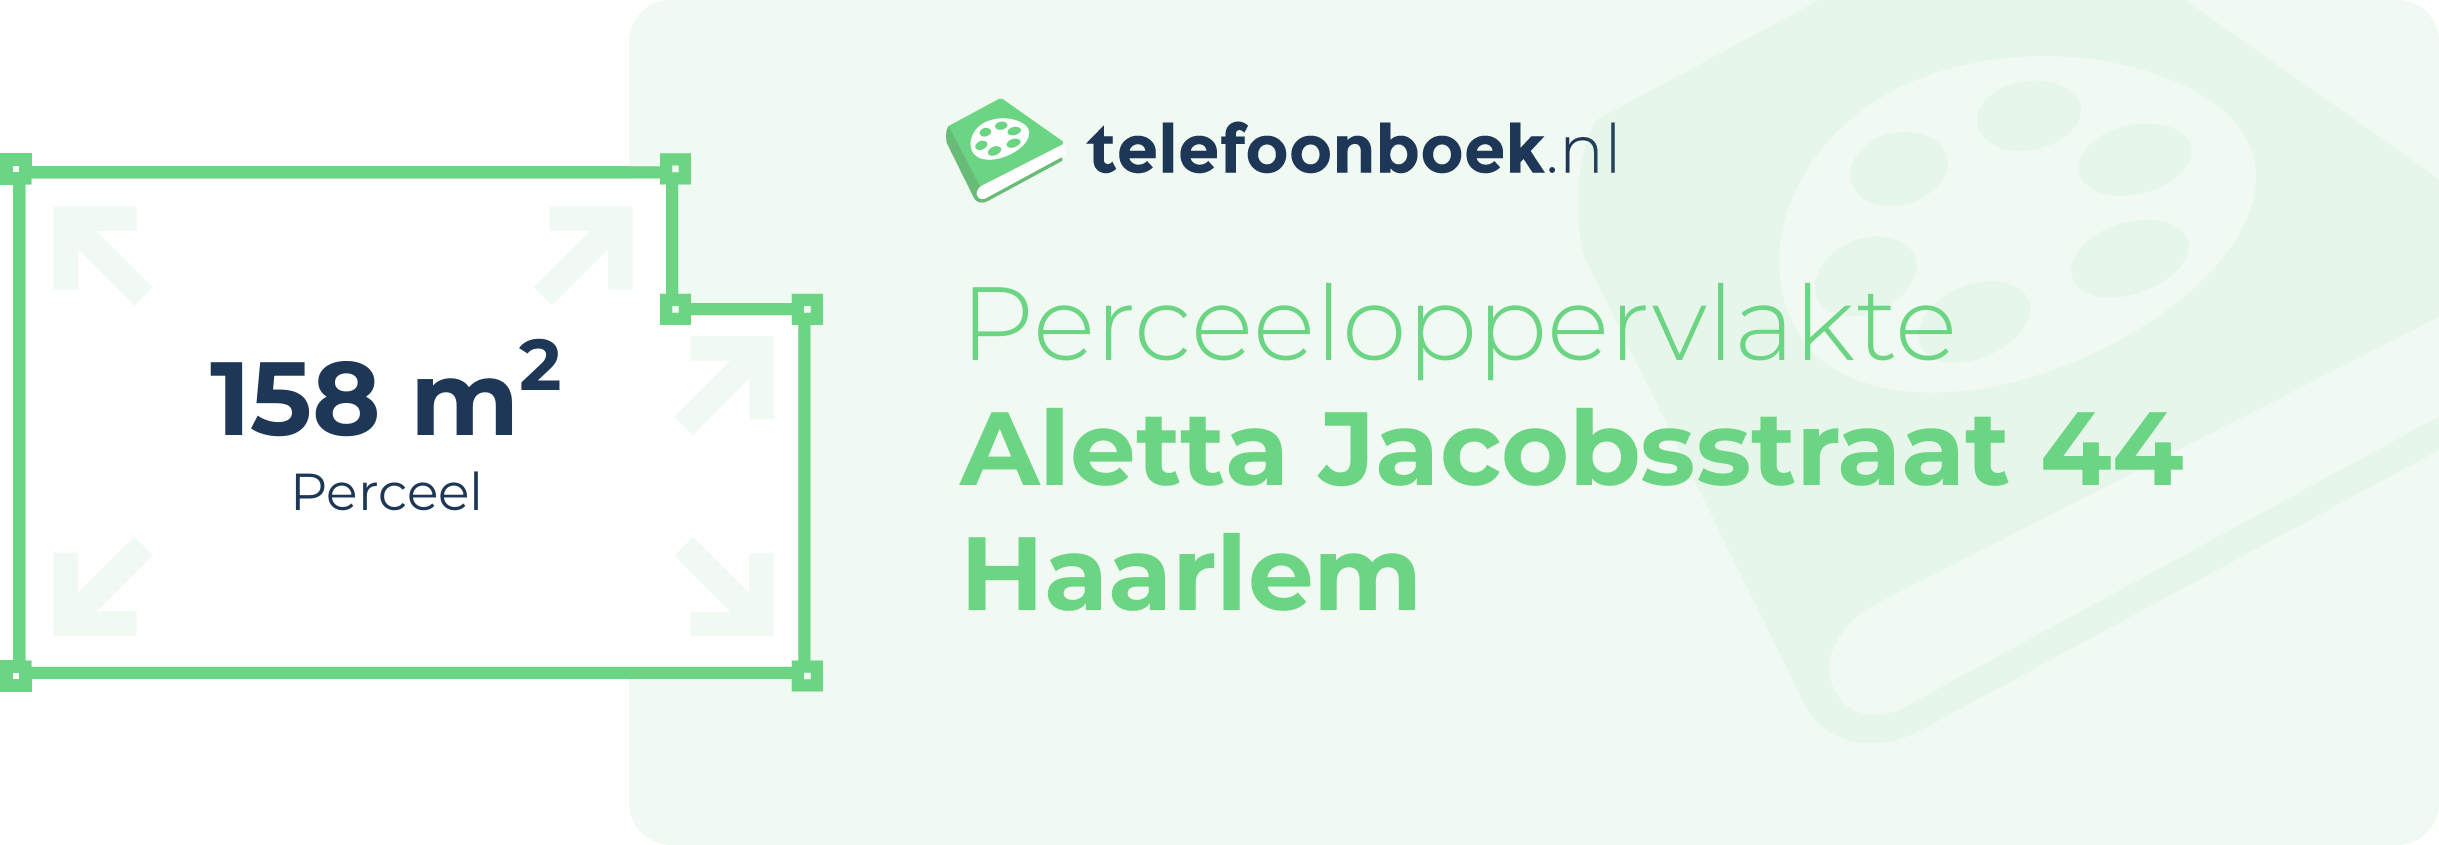 Perceeloppervlakte Aletta Jacobsstraat 44 Haarlem